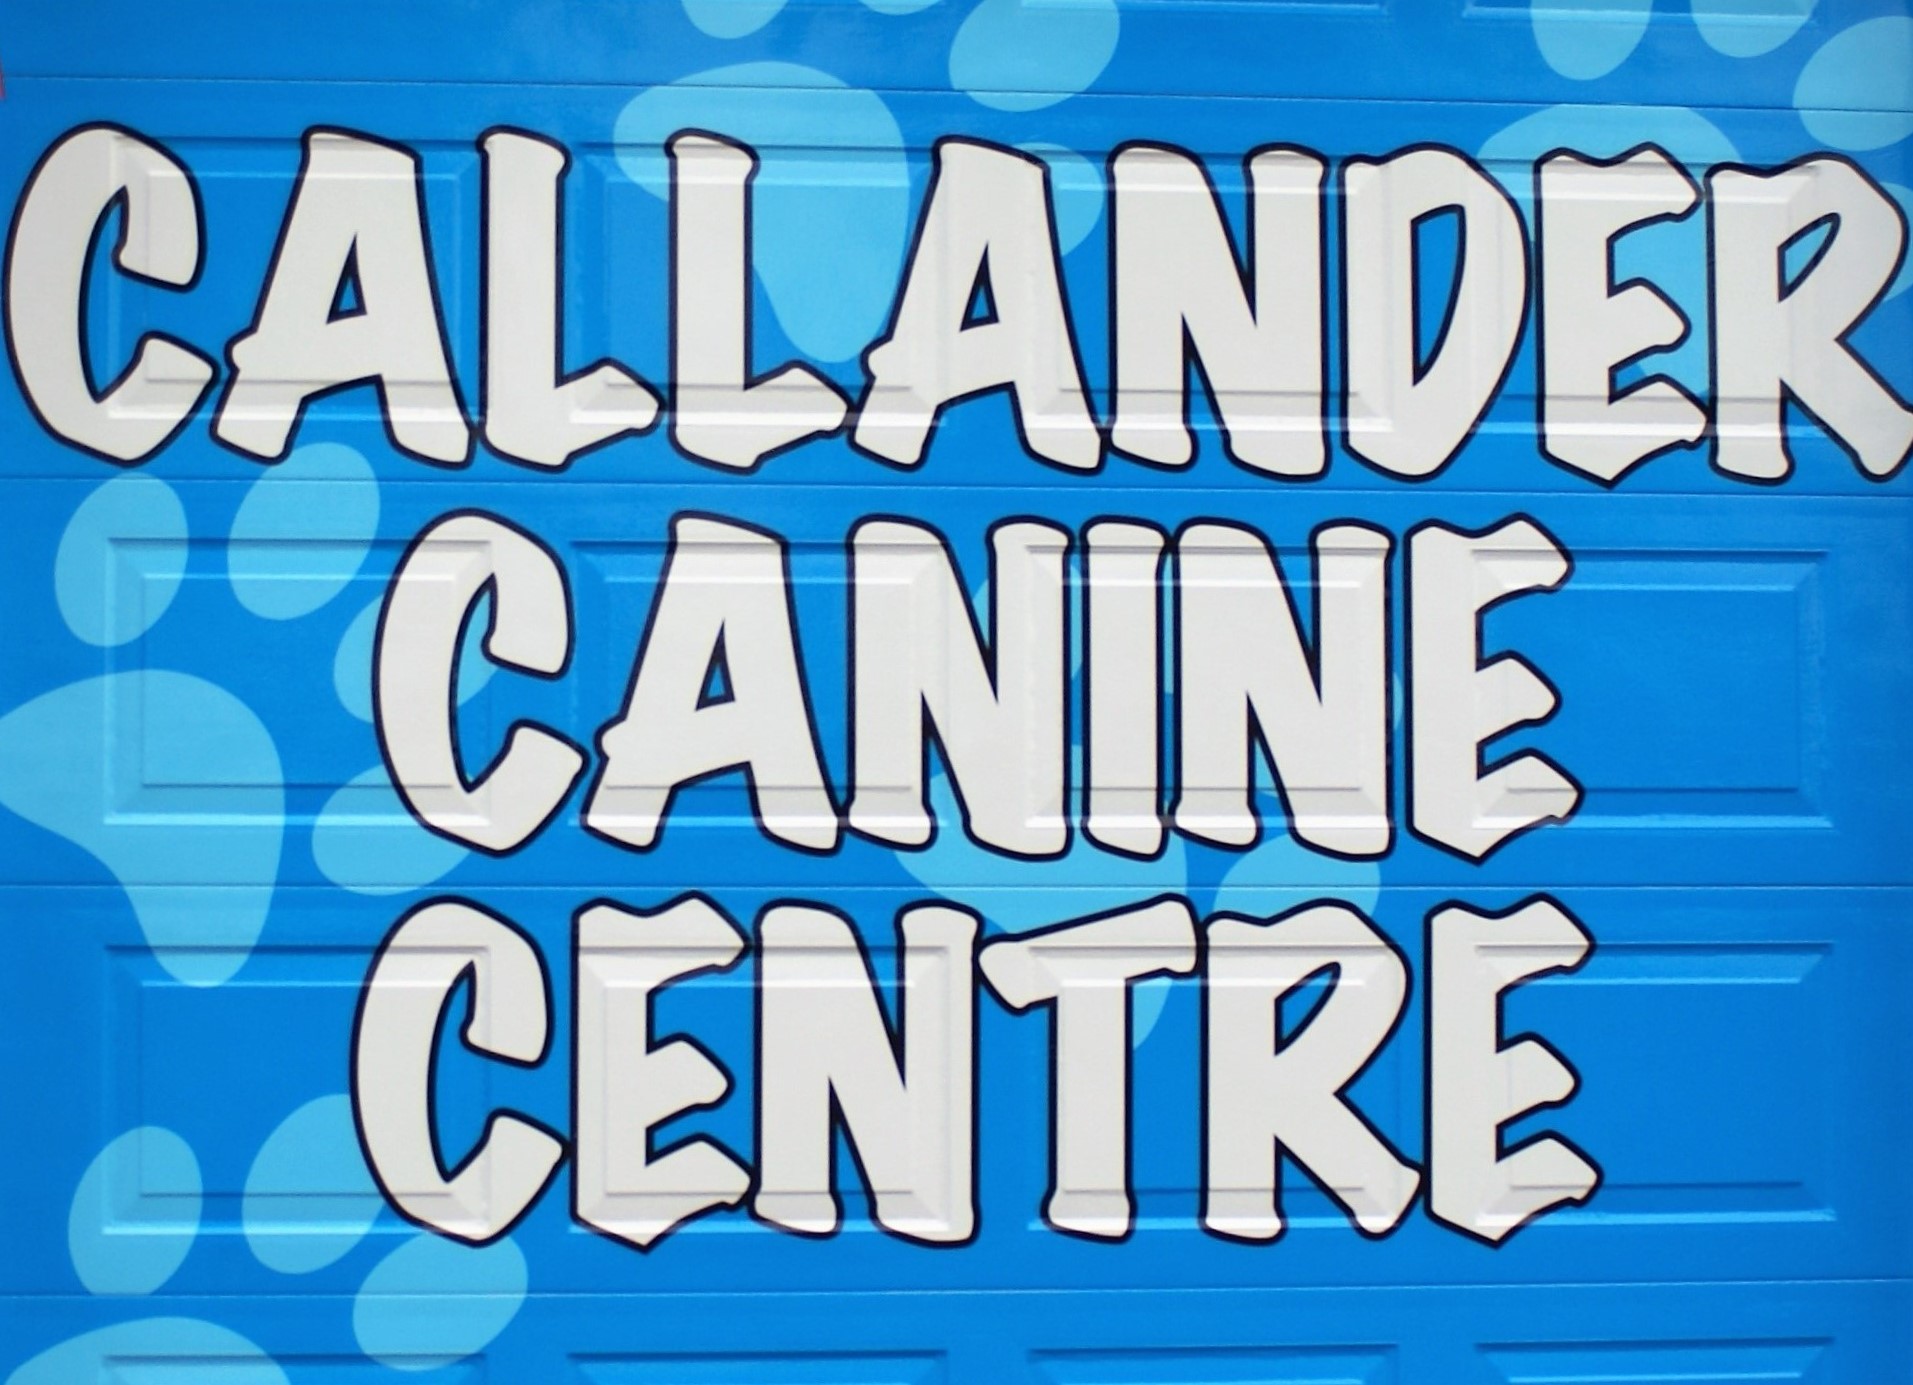 Callander Canine Centre